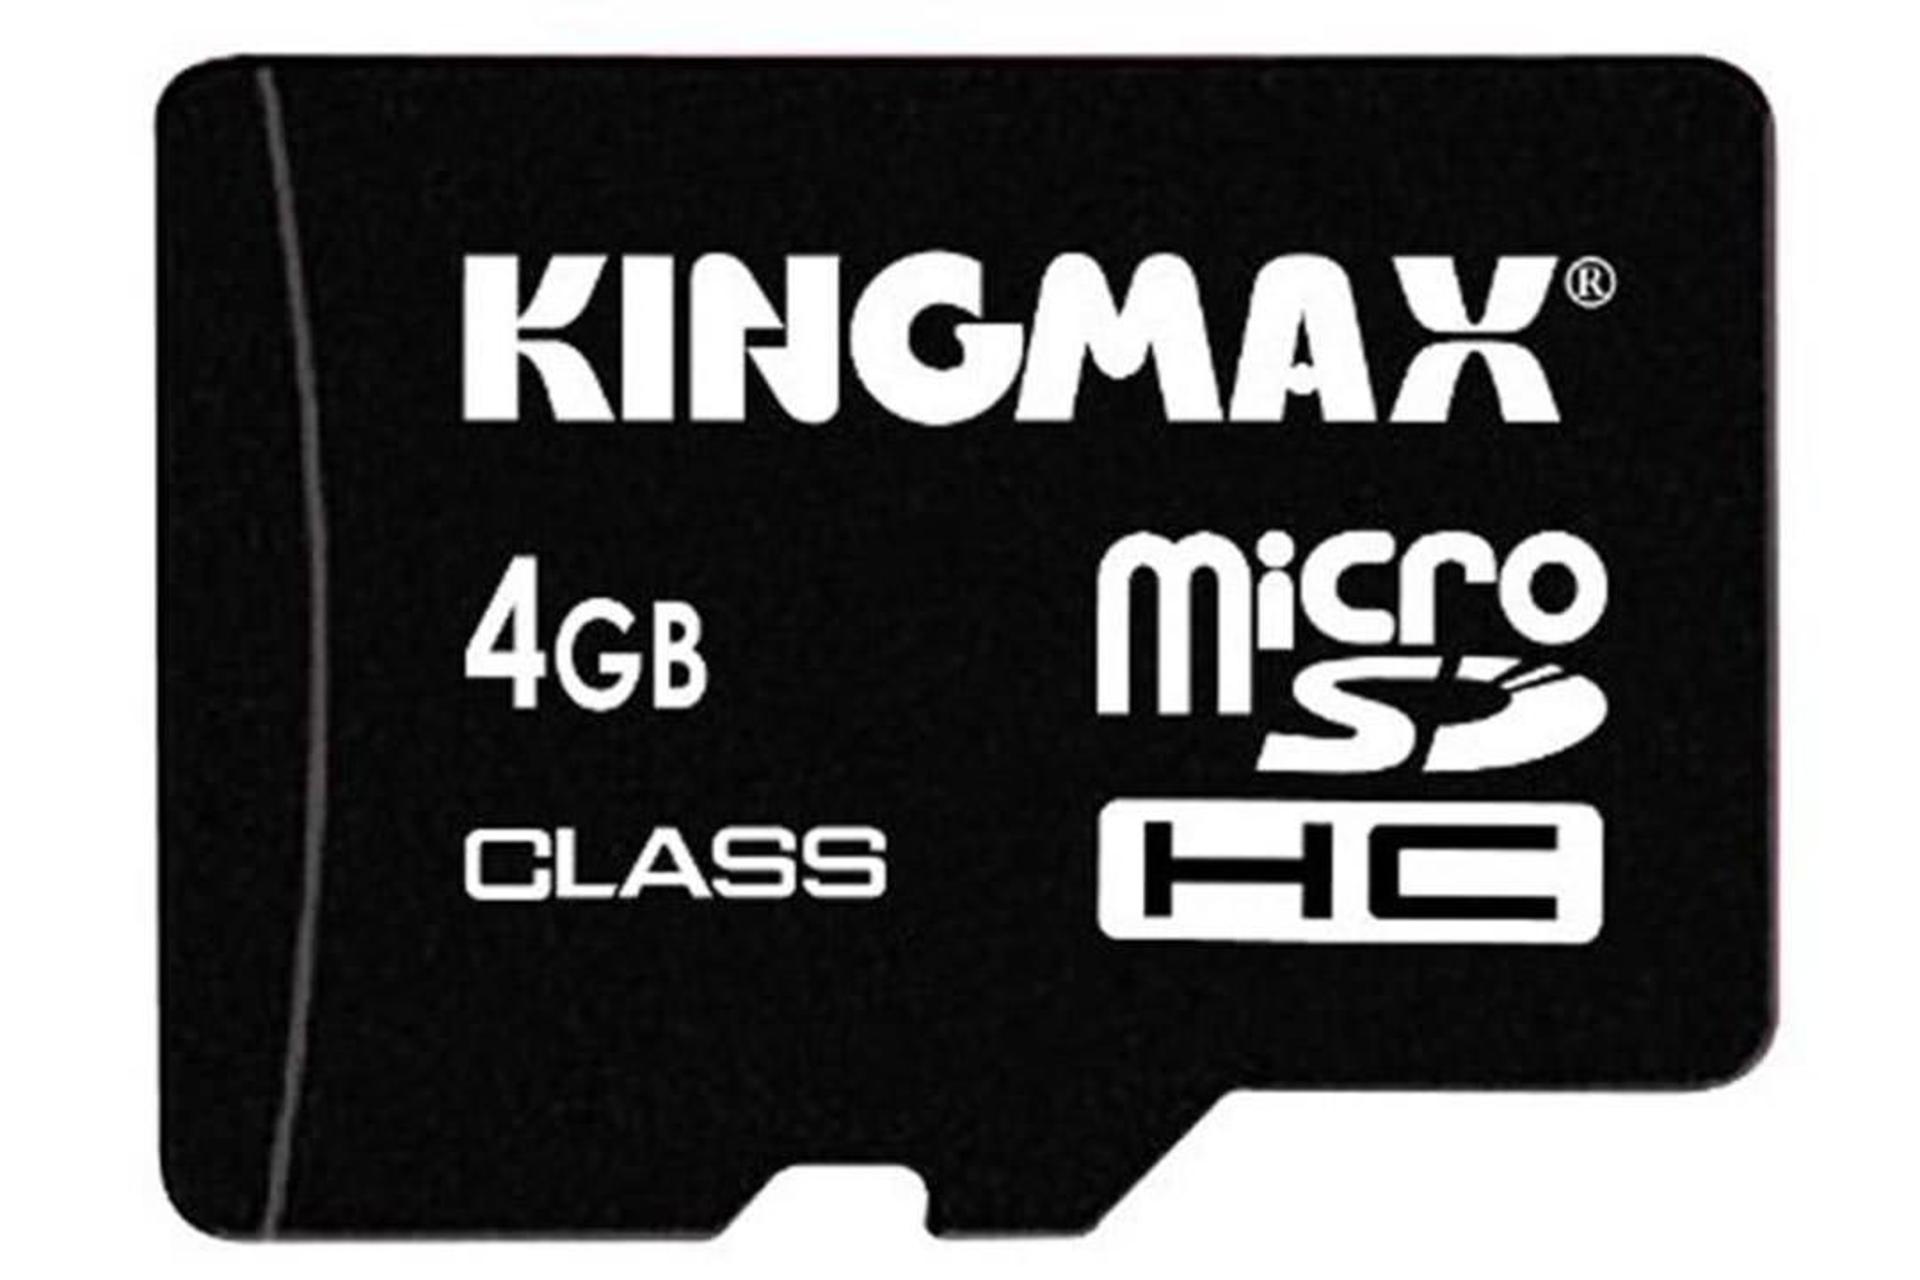 Kingmax microSDHC Class 2 4GB